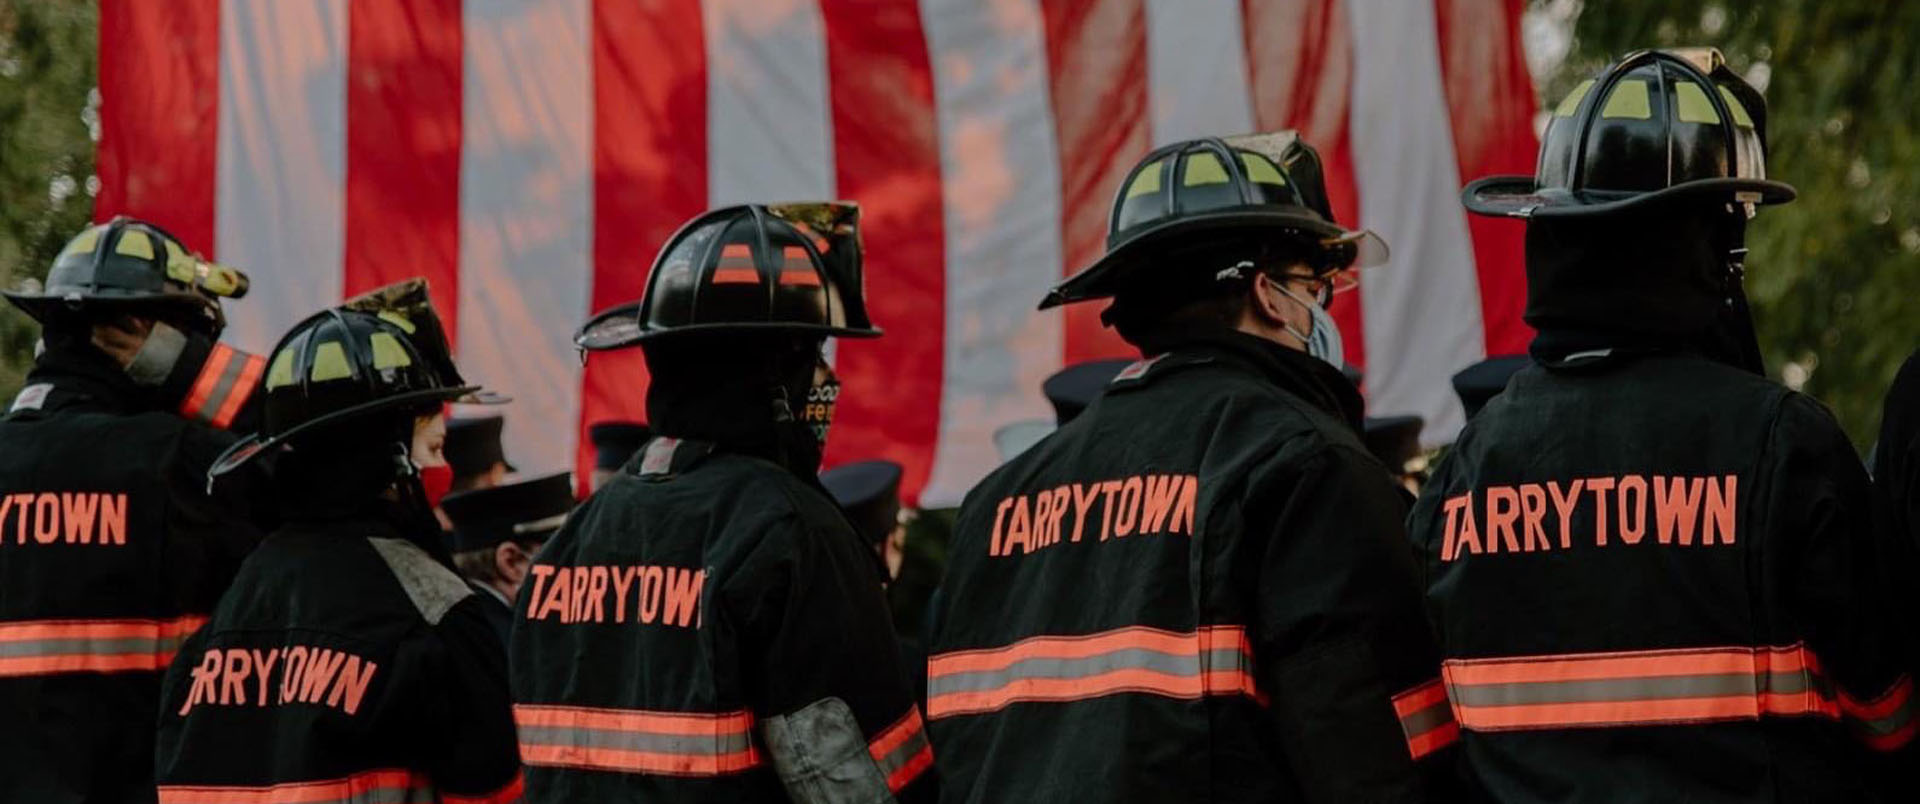 Tarrytown firefighters